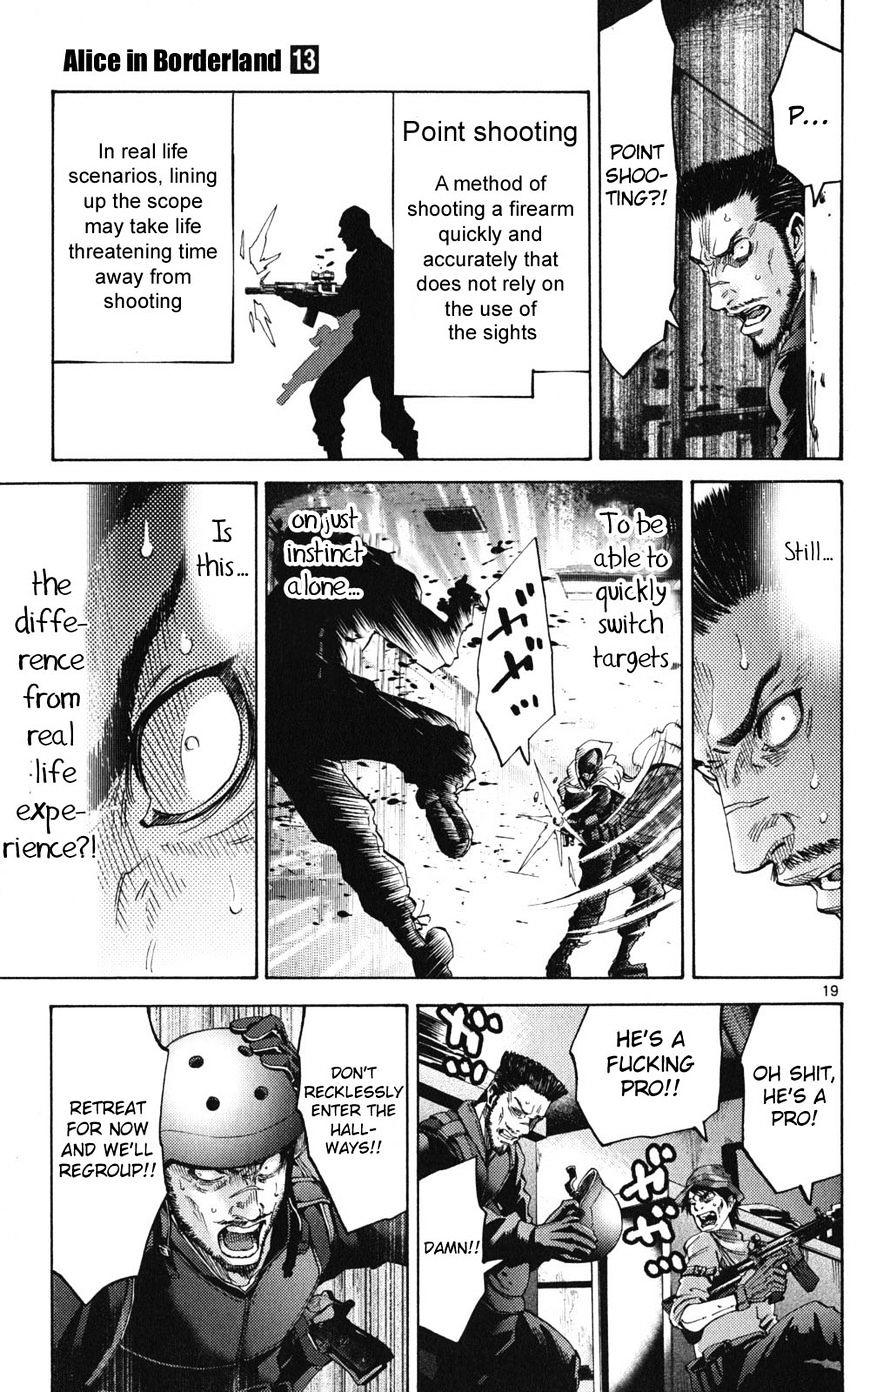 Imawa No Kuni No Alice Chapter 49.1 : Side Story 5 - King Of Spades (1) page 17 - Mangakakalot